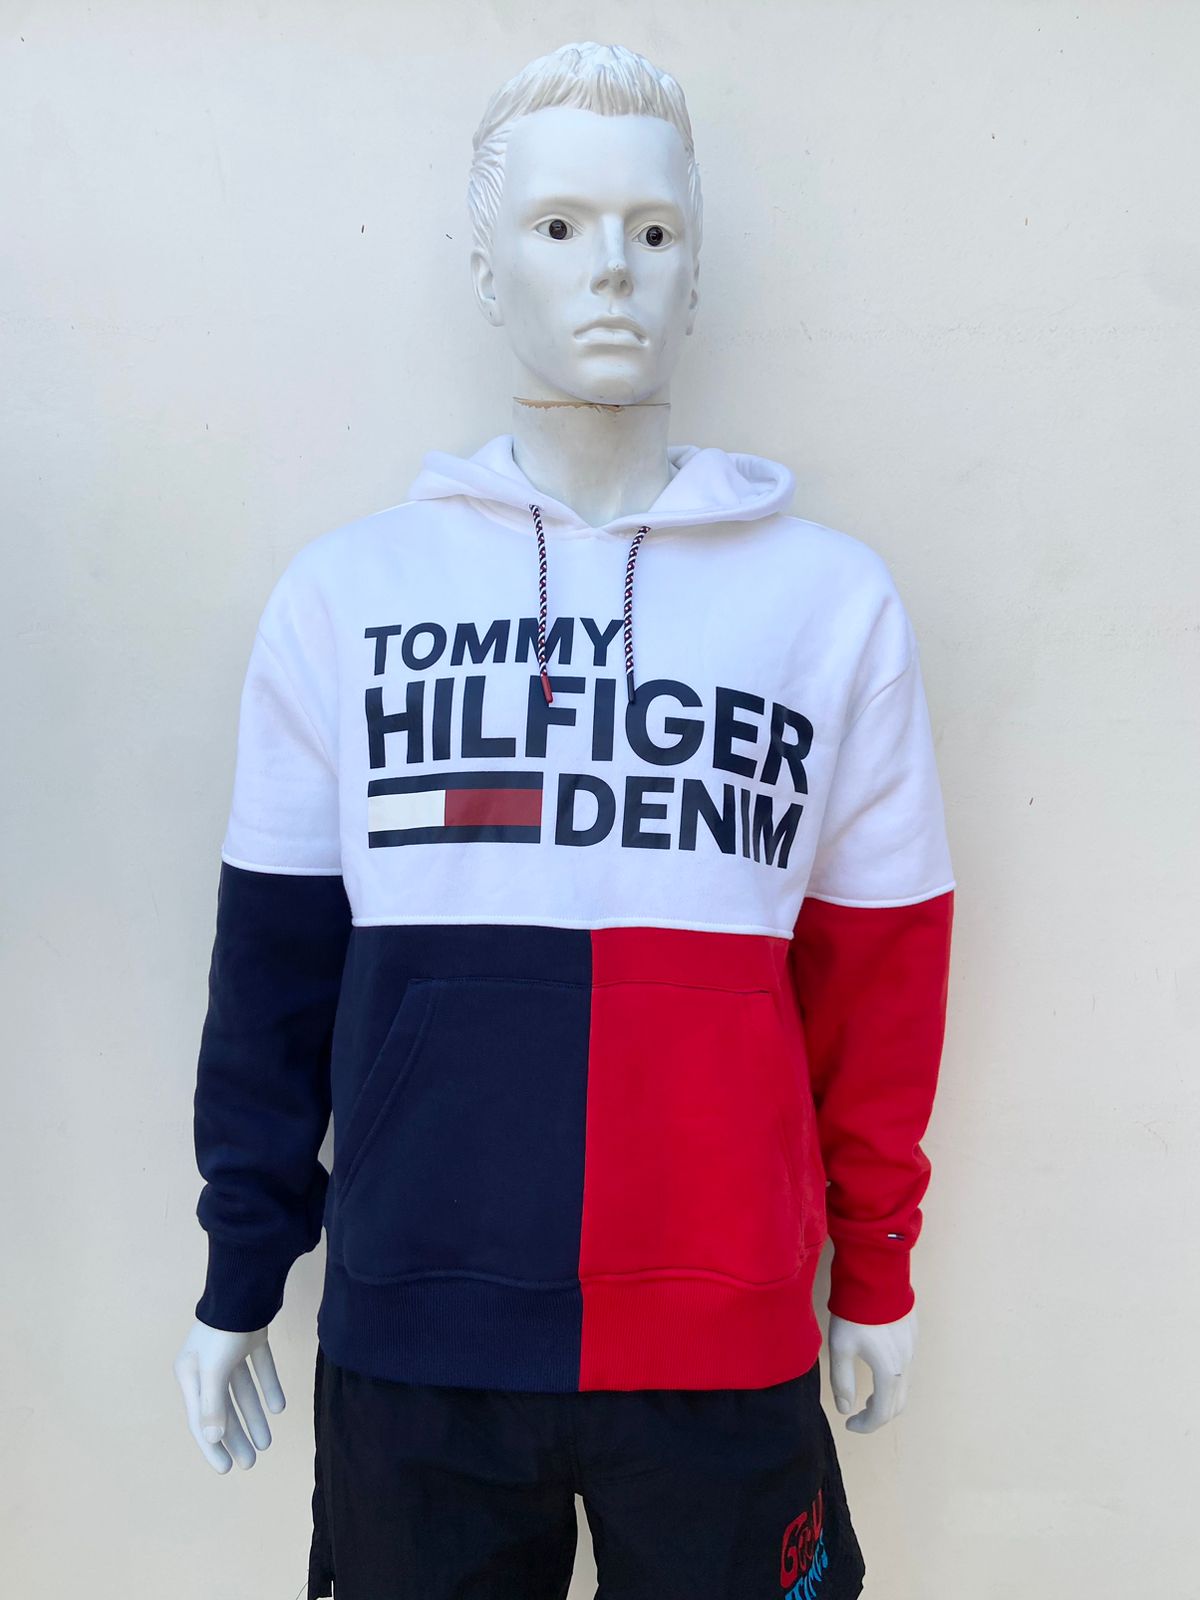 Abrigo Tommy Hilfiger original blanco con rojo y azul marino y letras TOMMY HILFIGER DENIM en frente, manga larga.